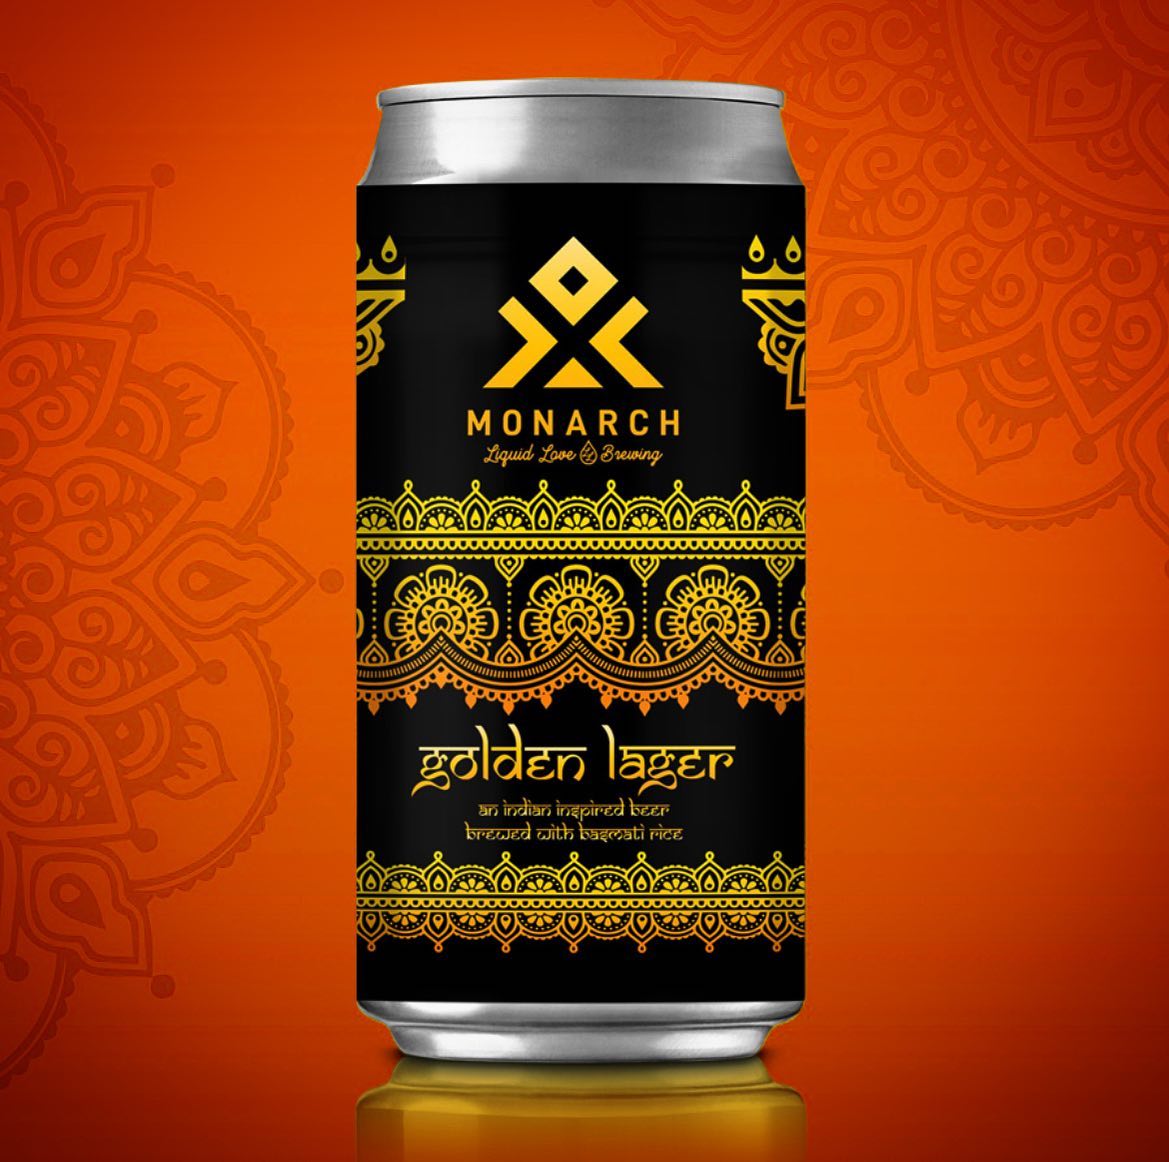 Liquid Love Brewing Co.'s Monarch Golden Lager